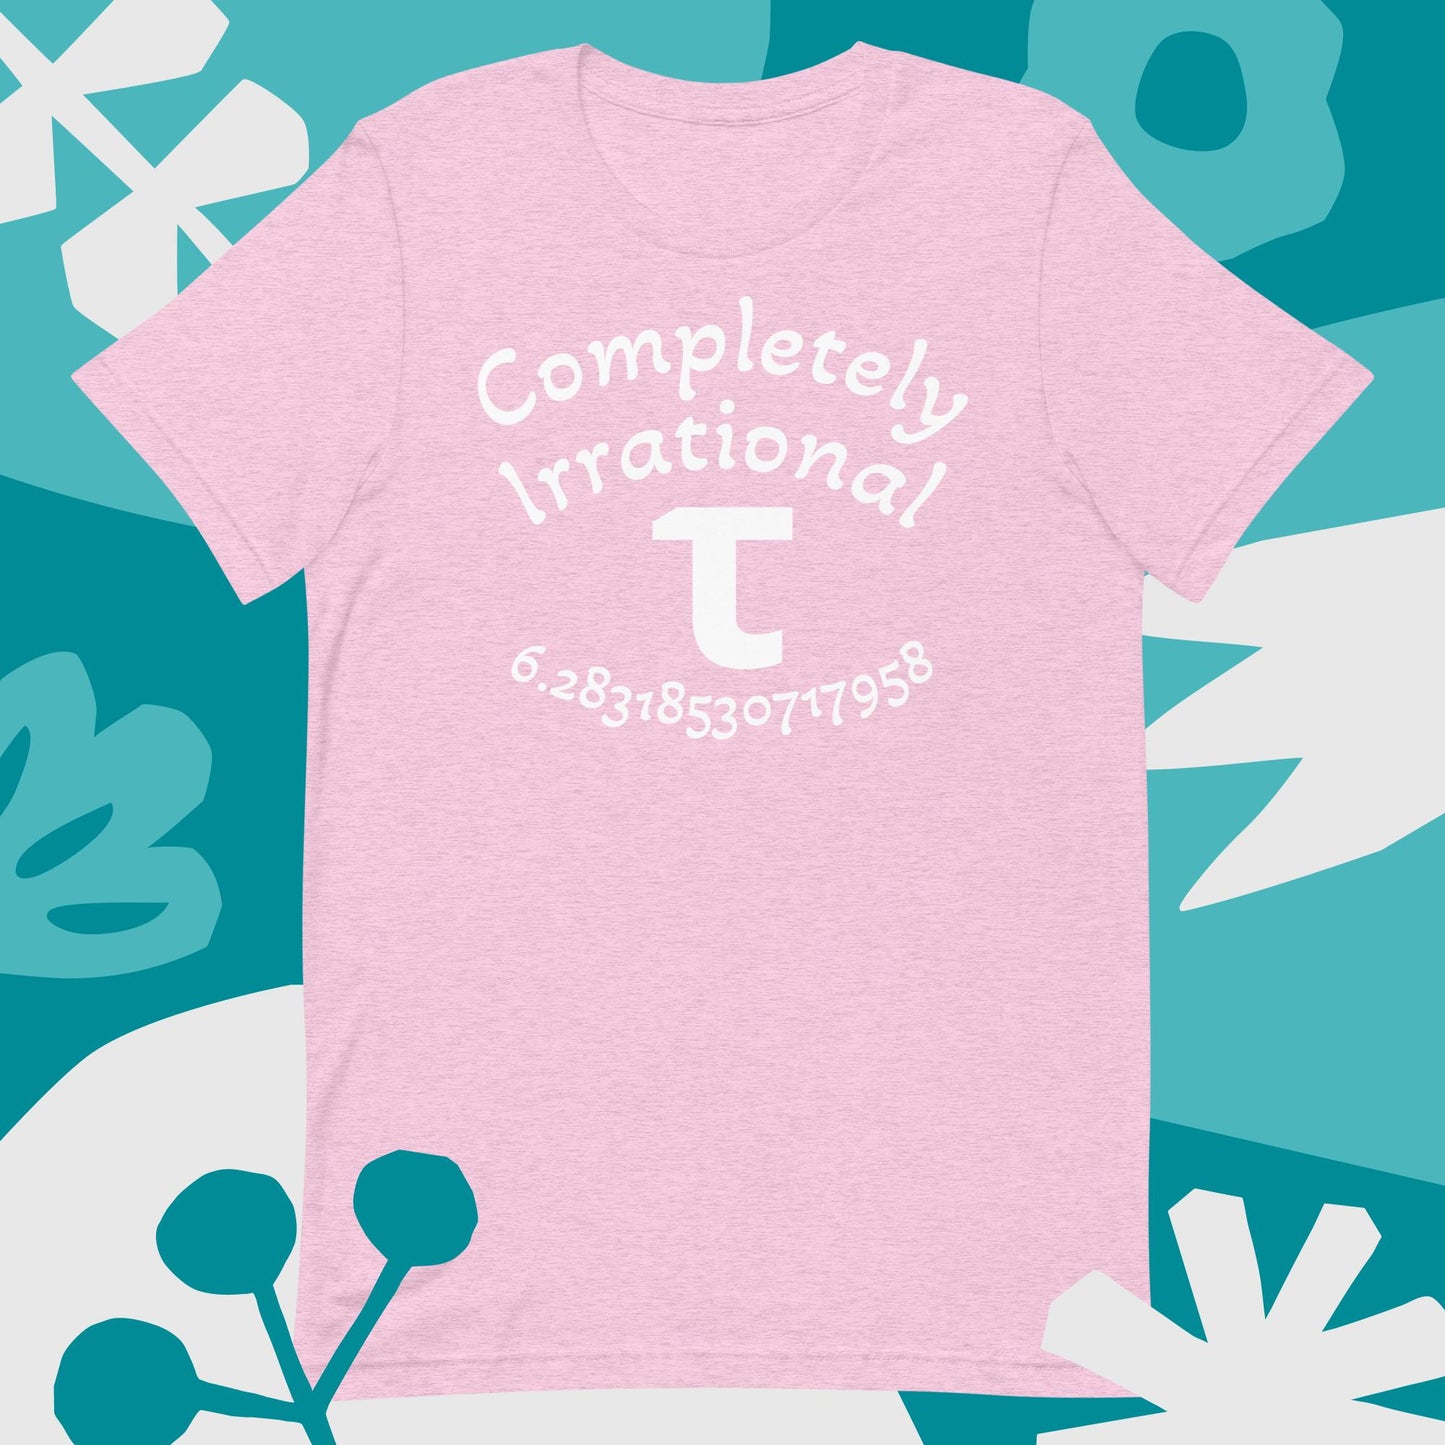 Completely Irrational τ (Tau) | Math | Adult Unisex T-Shirt